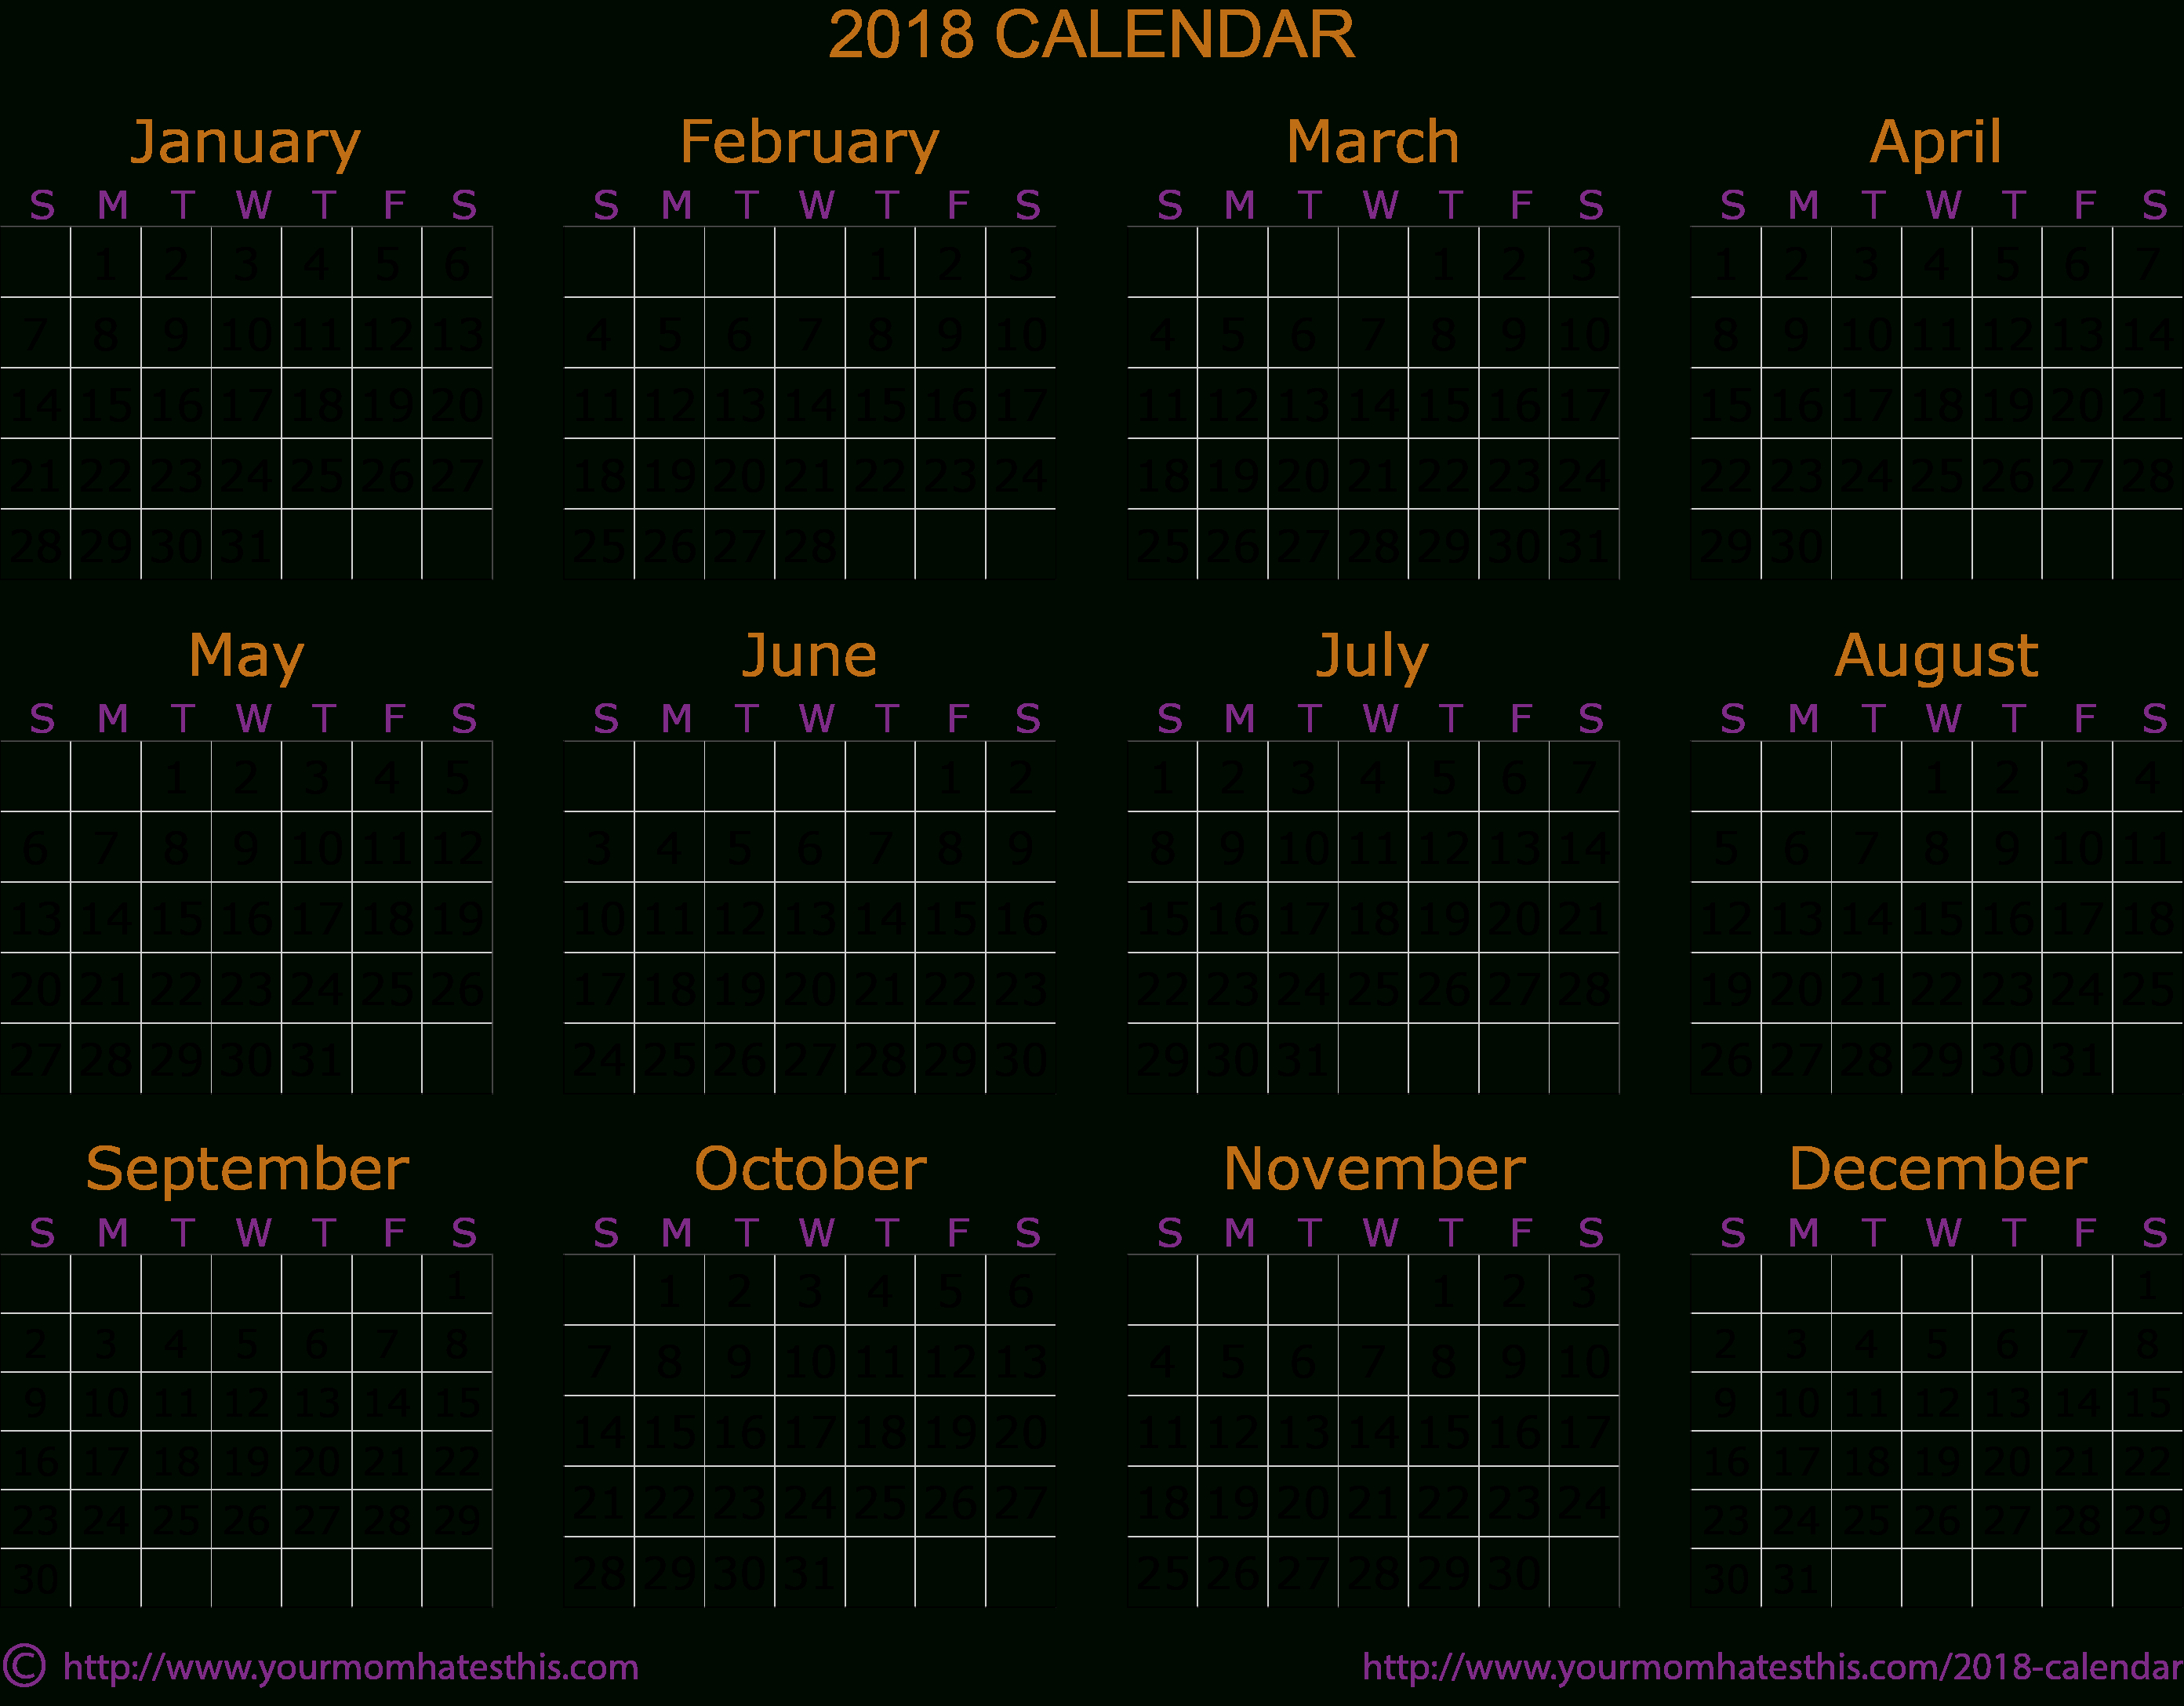 2018 Calendars – Download Quality Calendars